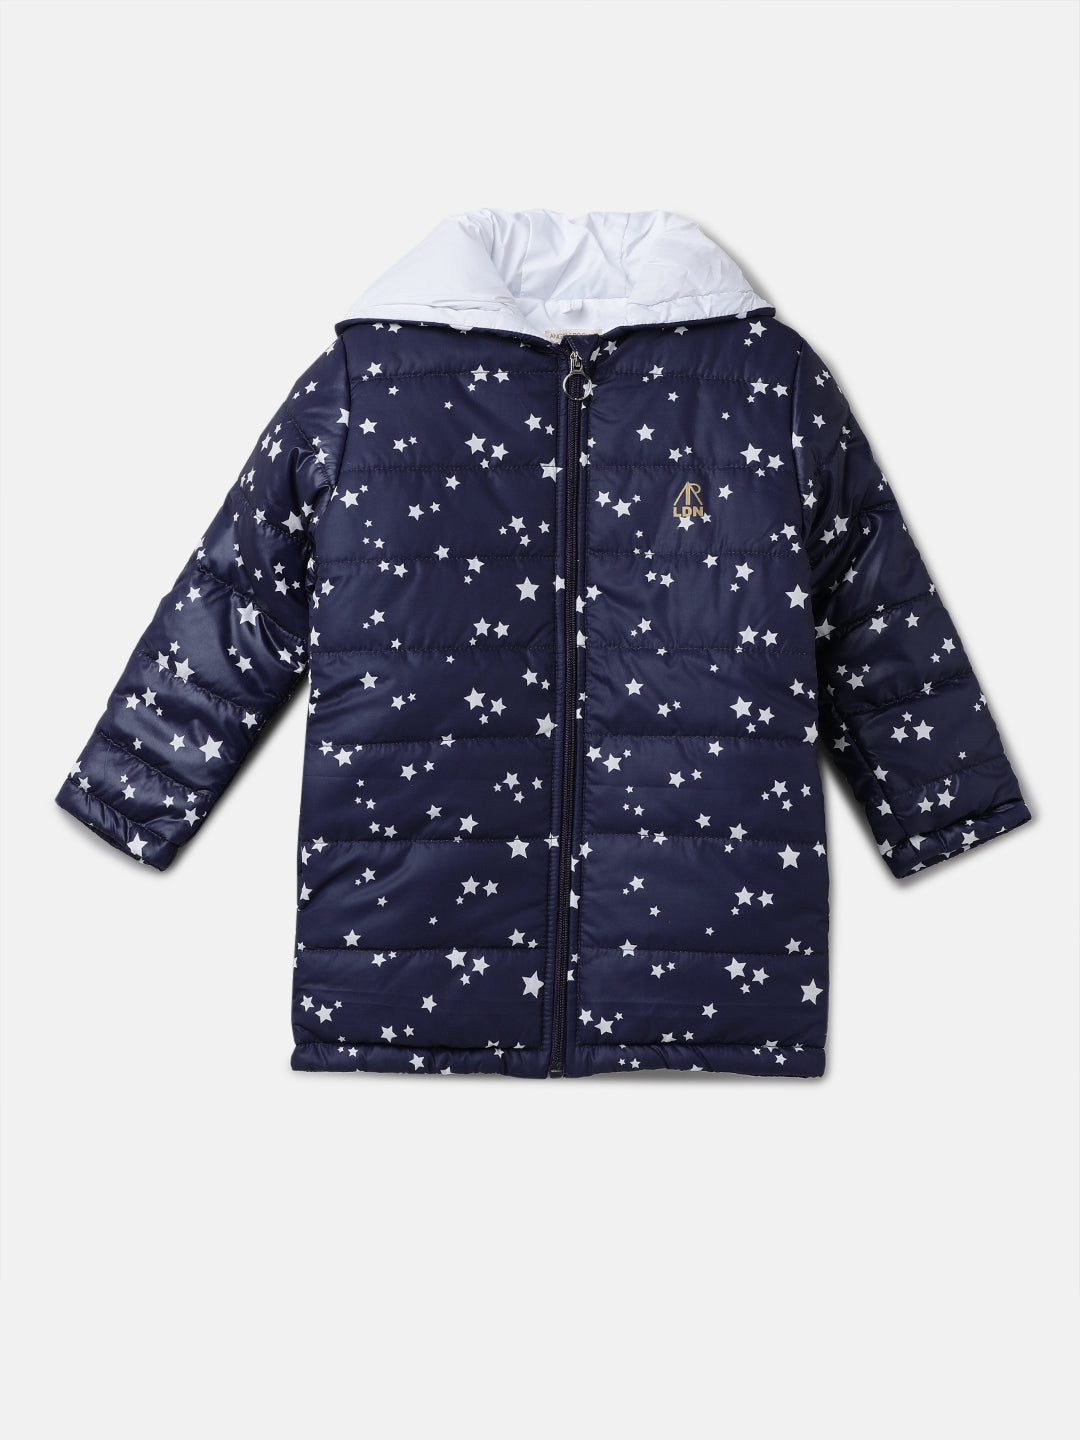 Girls Star Printed Navy Puffa Jacket with Hood